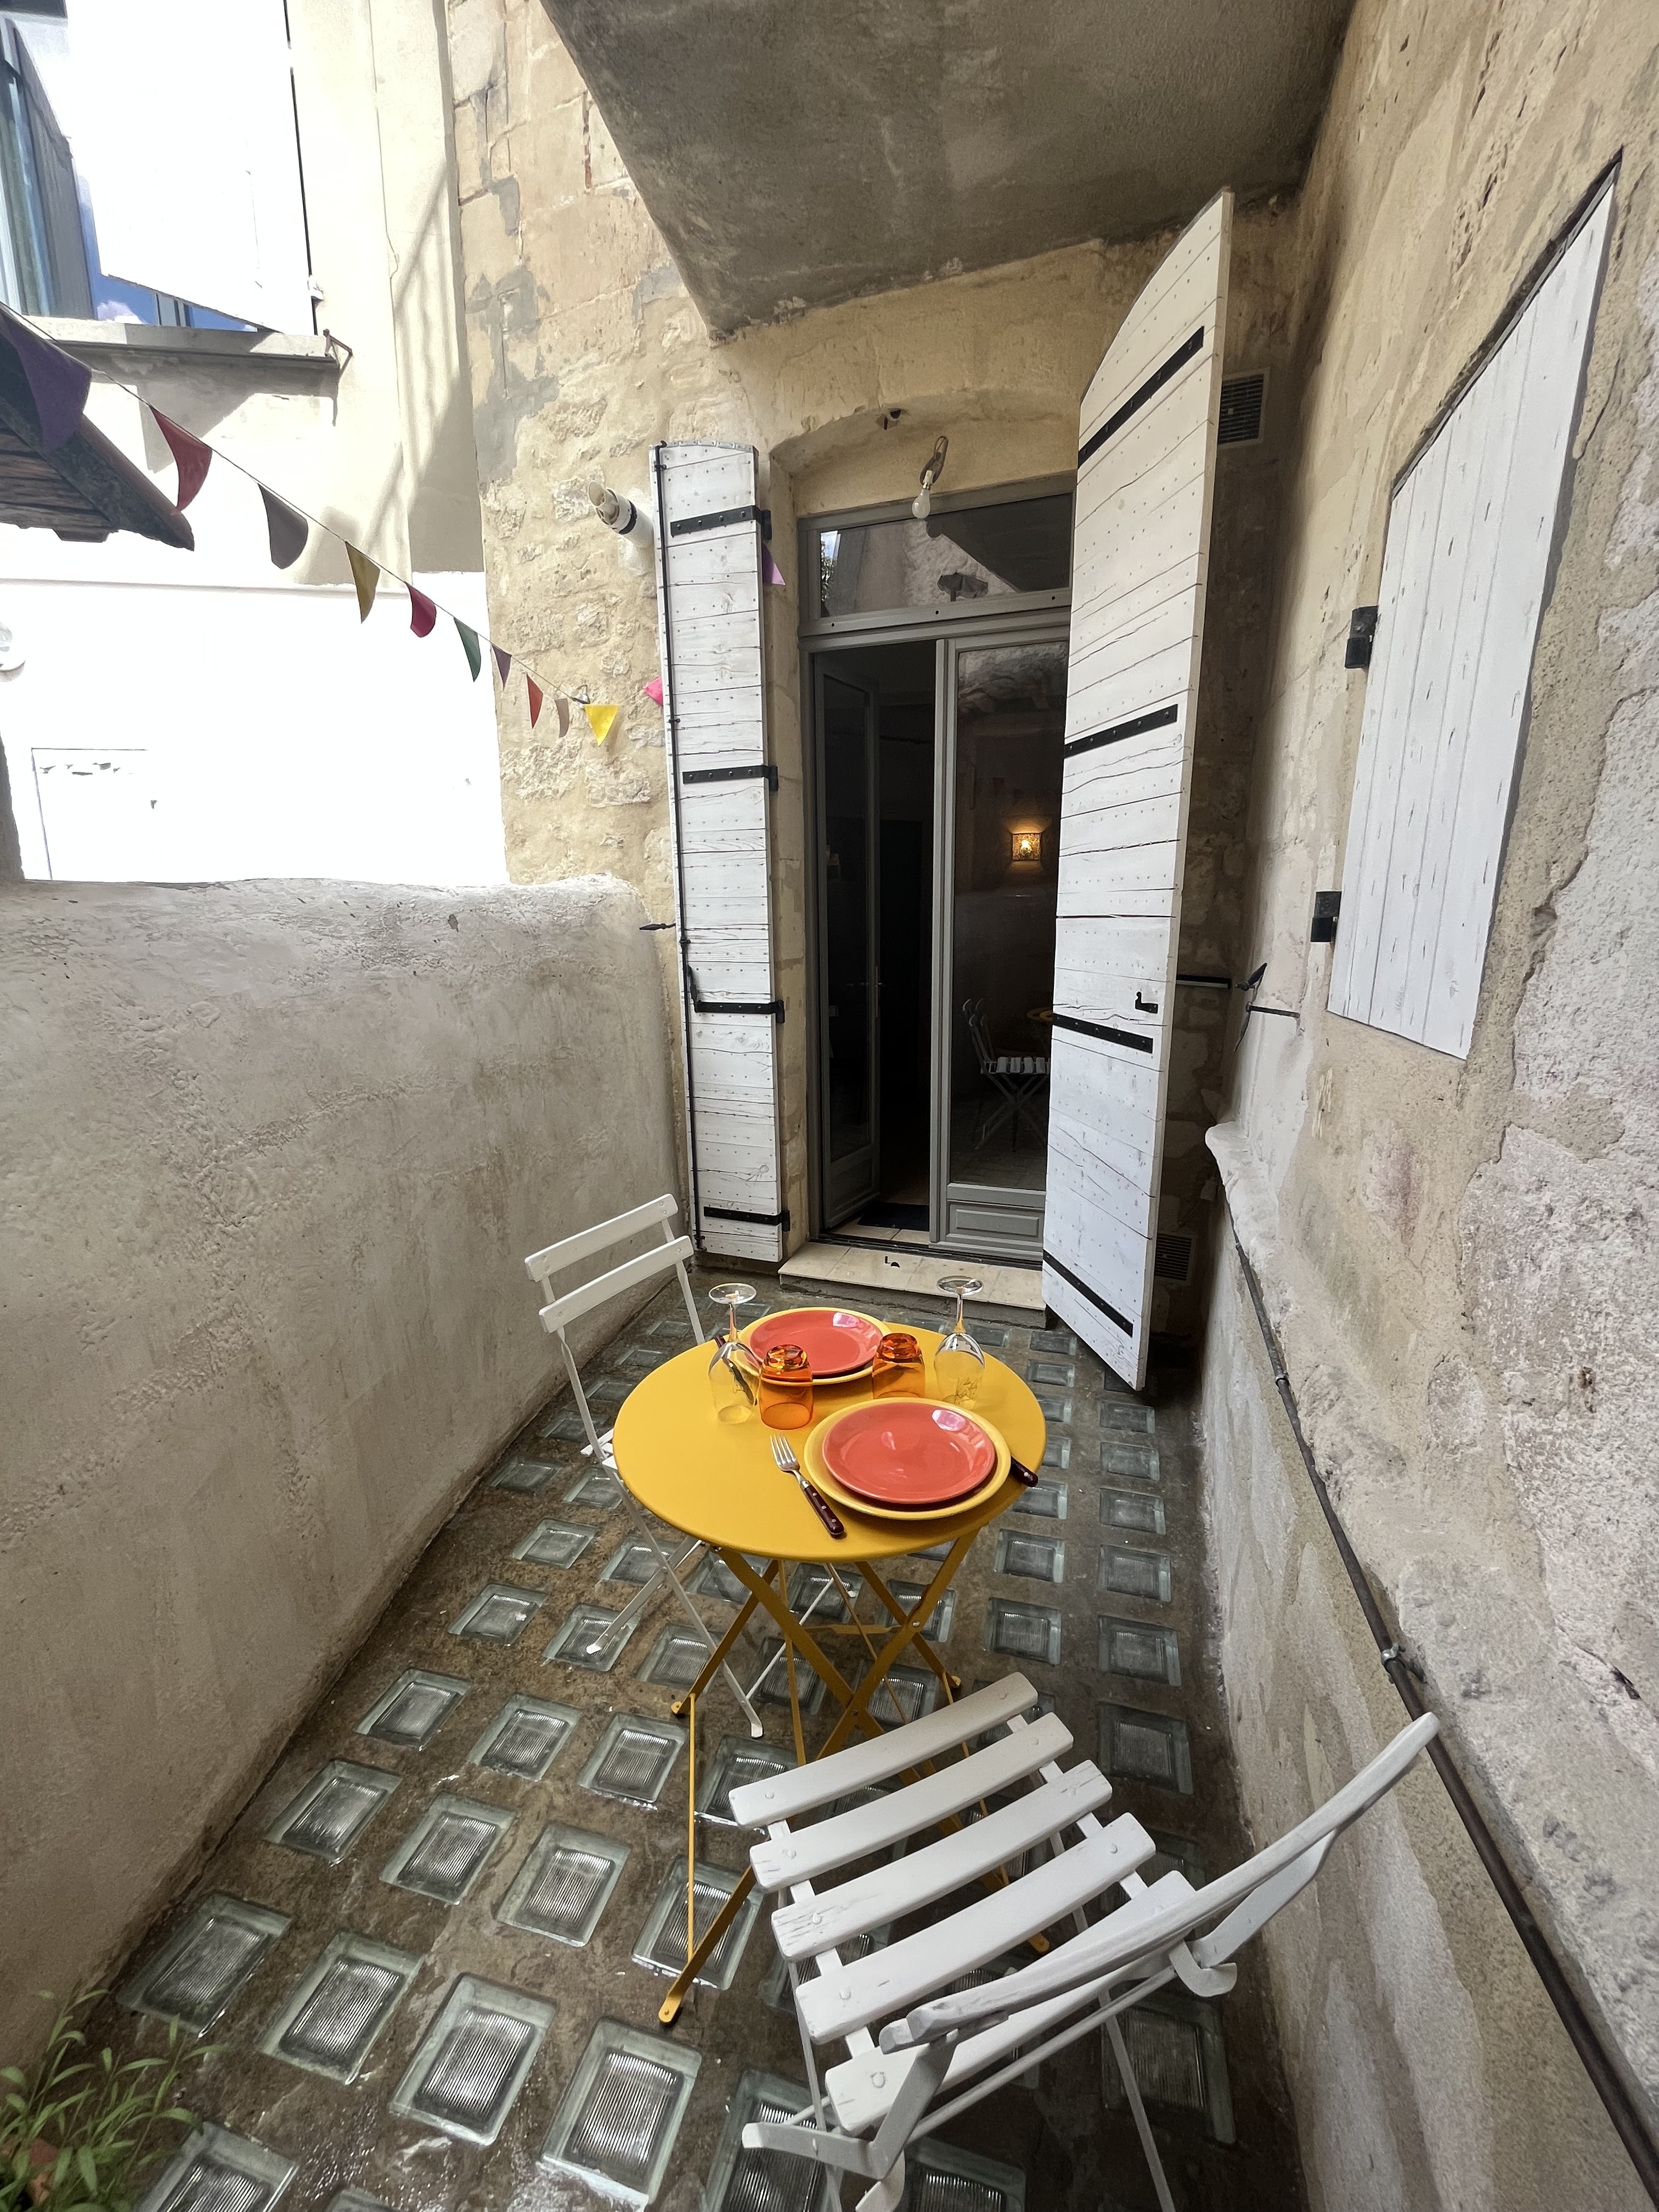 La maison jaune Arles centre avec terrasse null France null null null null